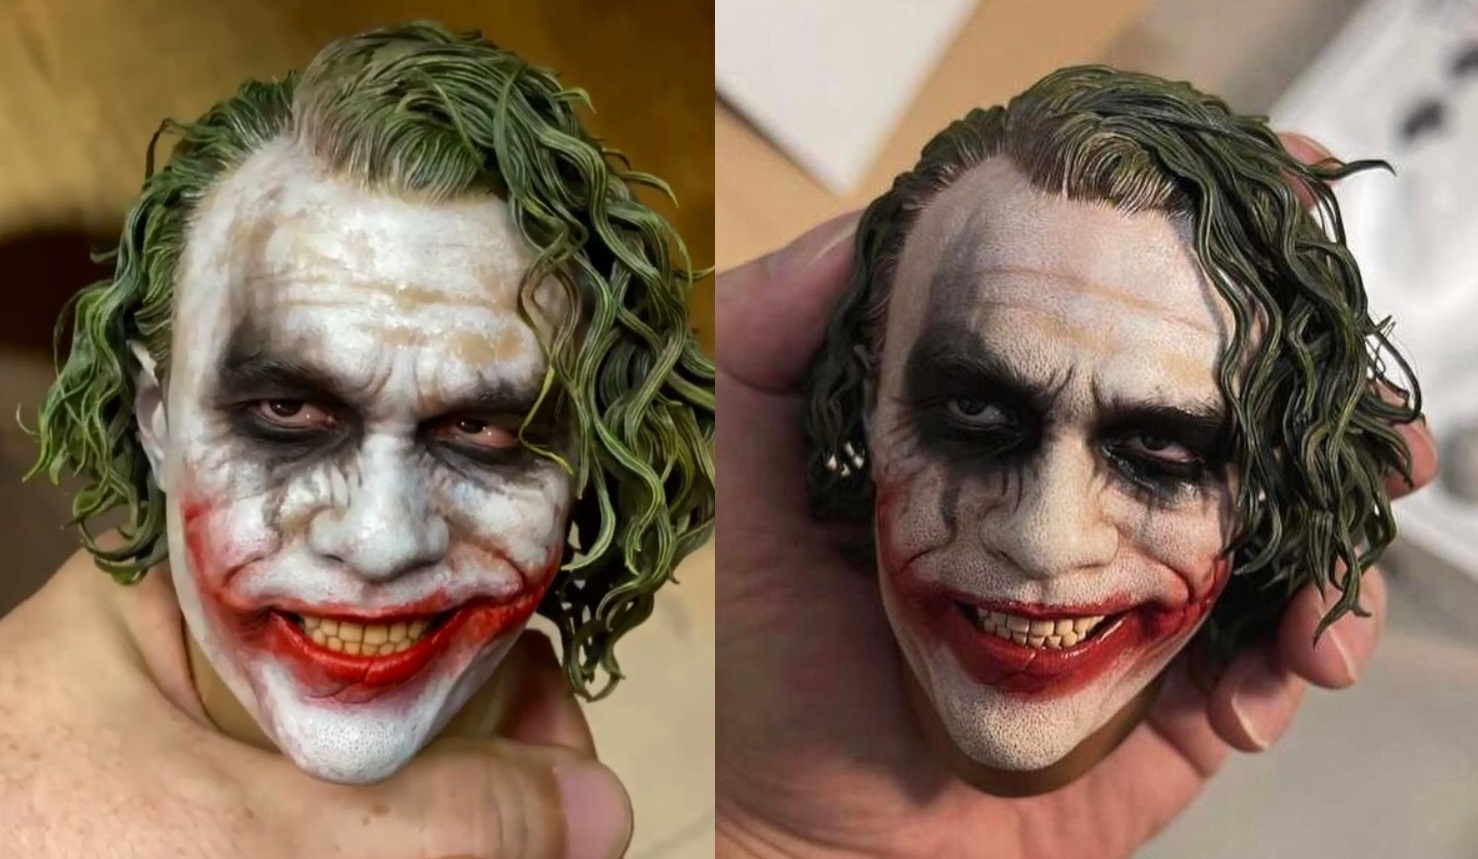 Prime-1-Studio-Joker-Comparison.jpg